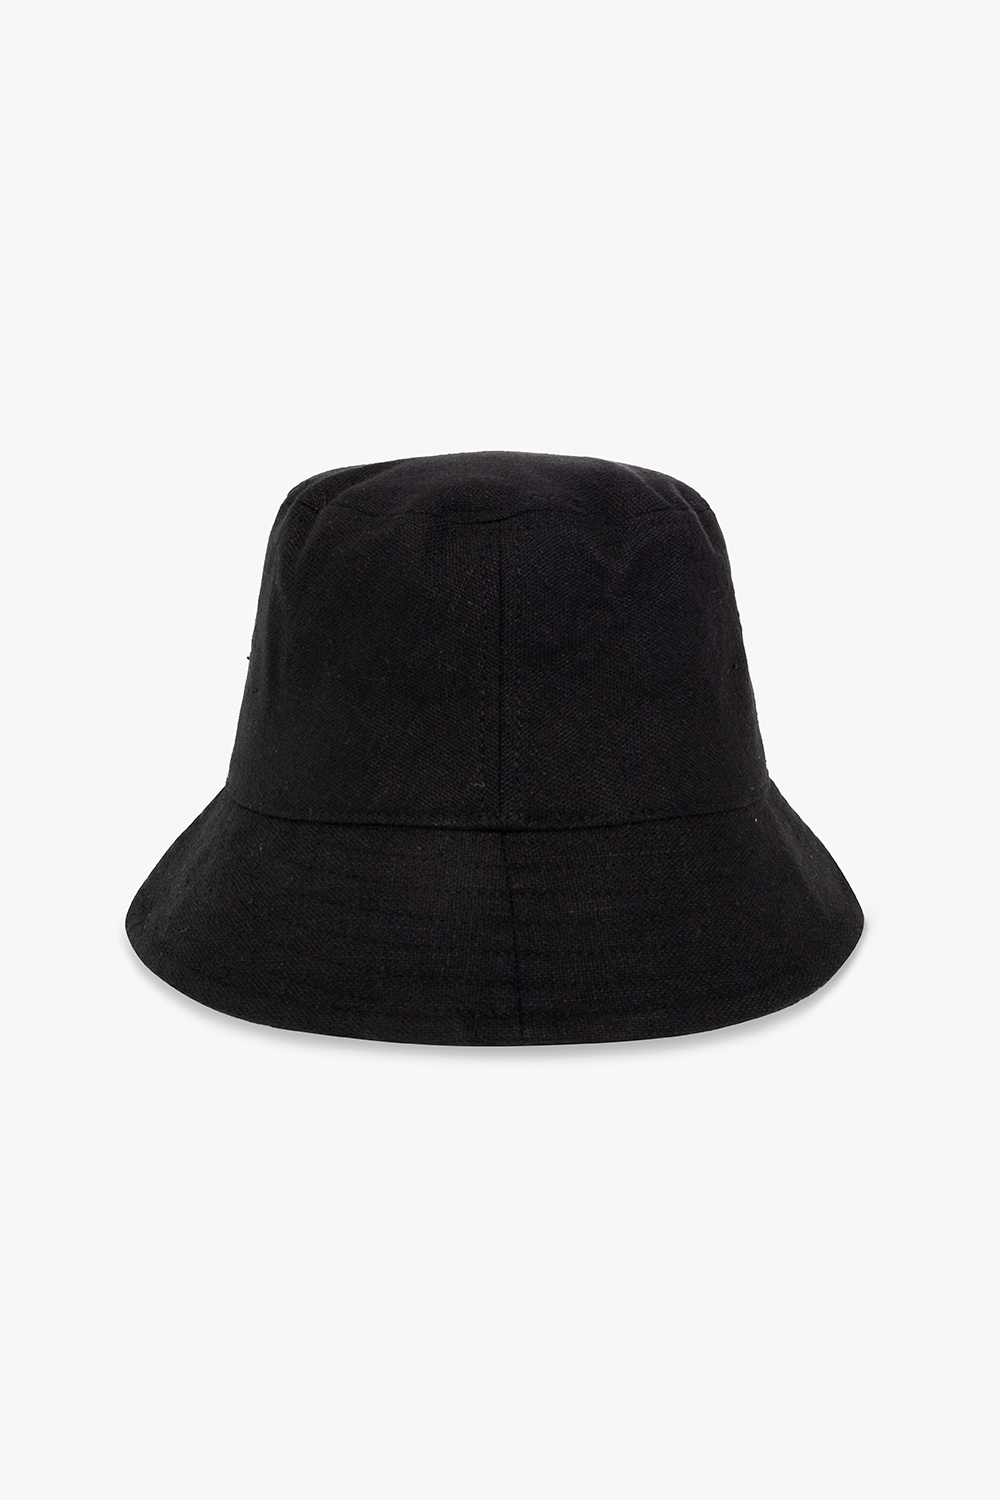 Samsøe Samsøe ‘Anton’ bucket medicom hat